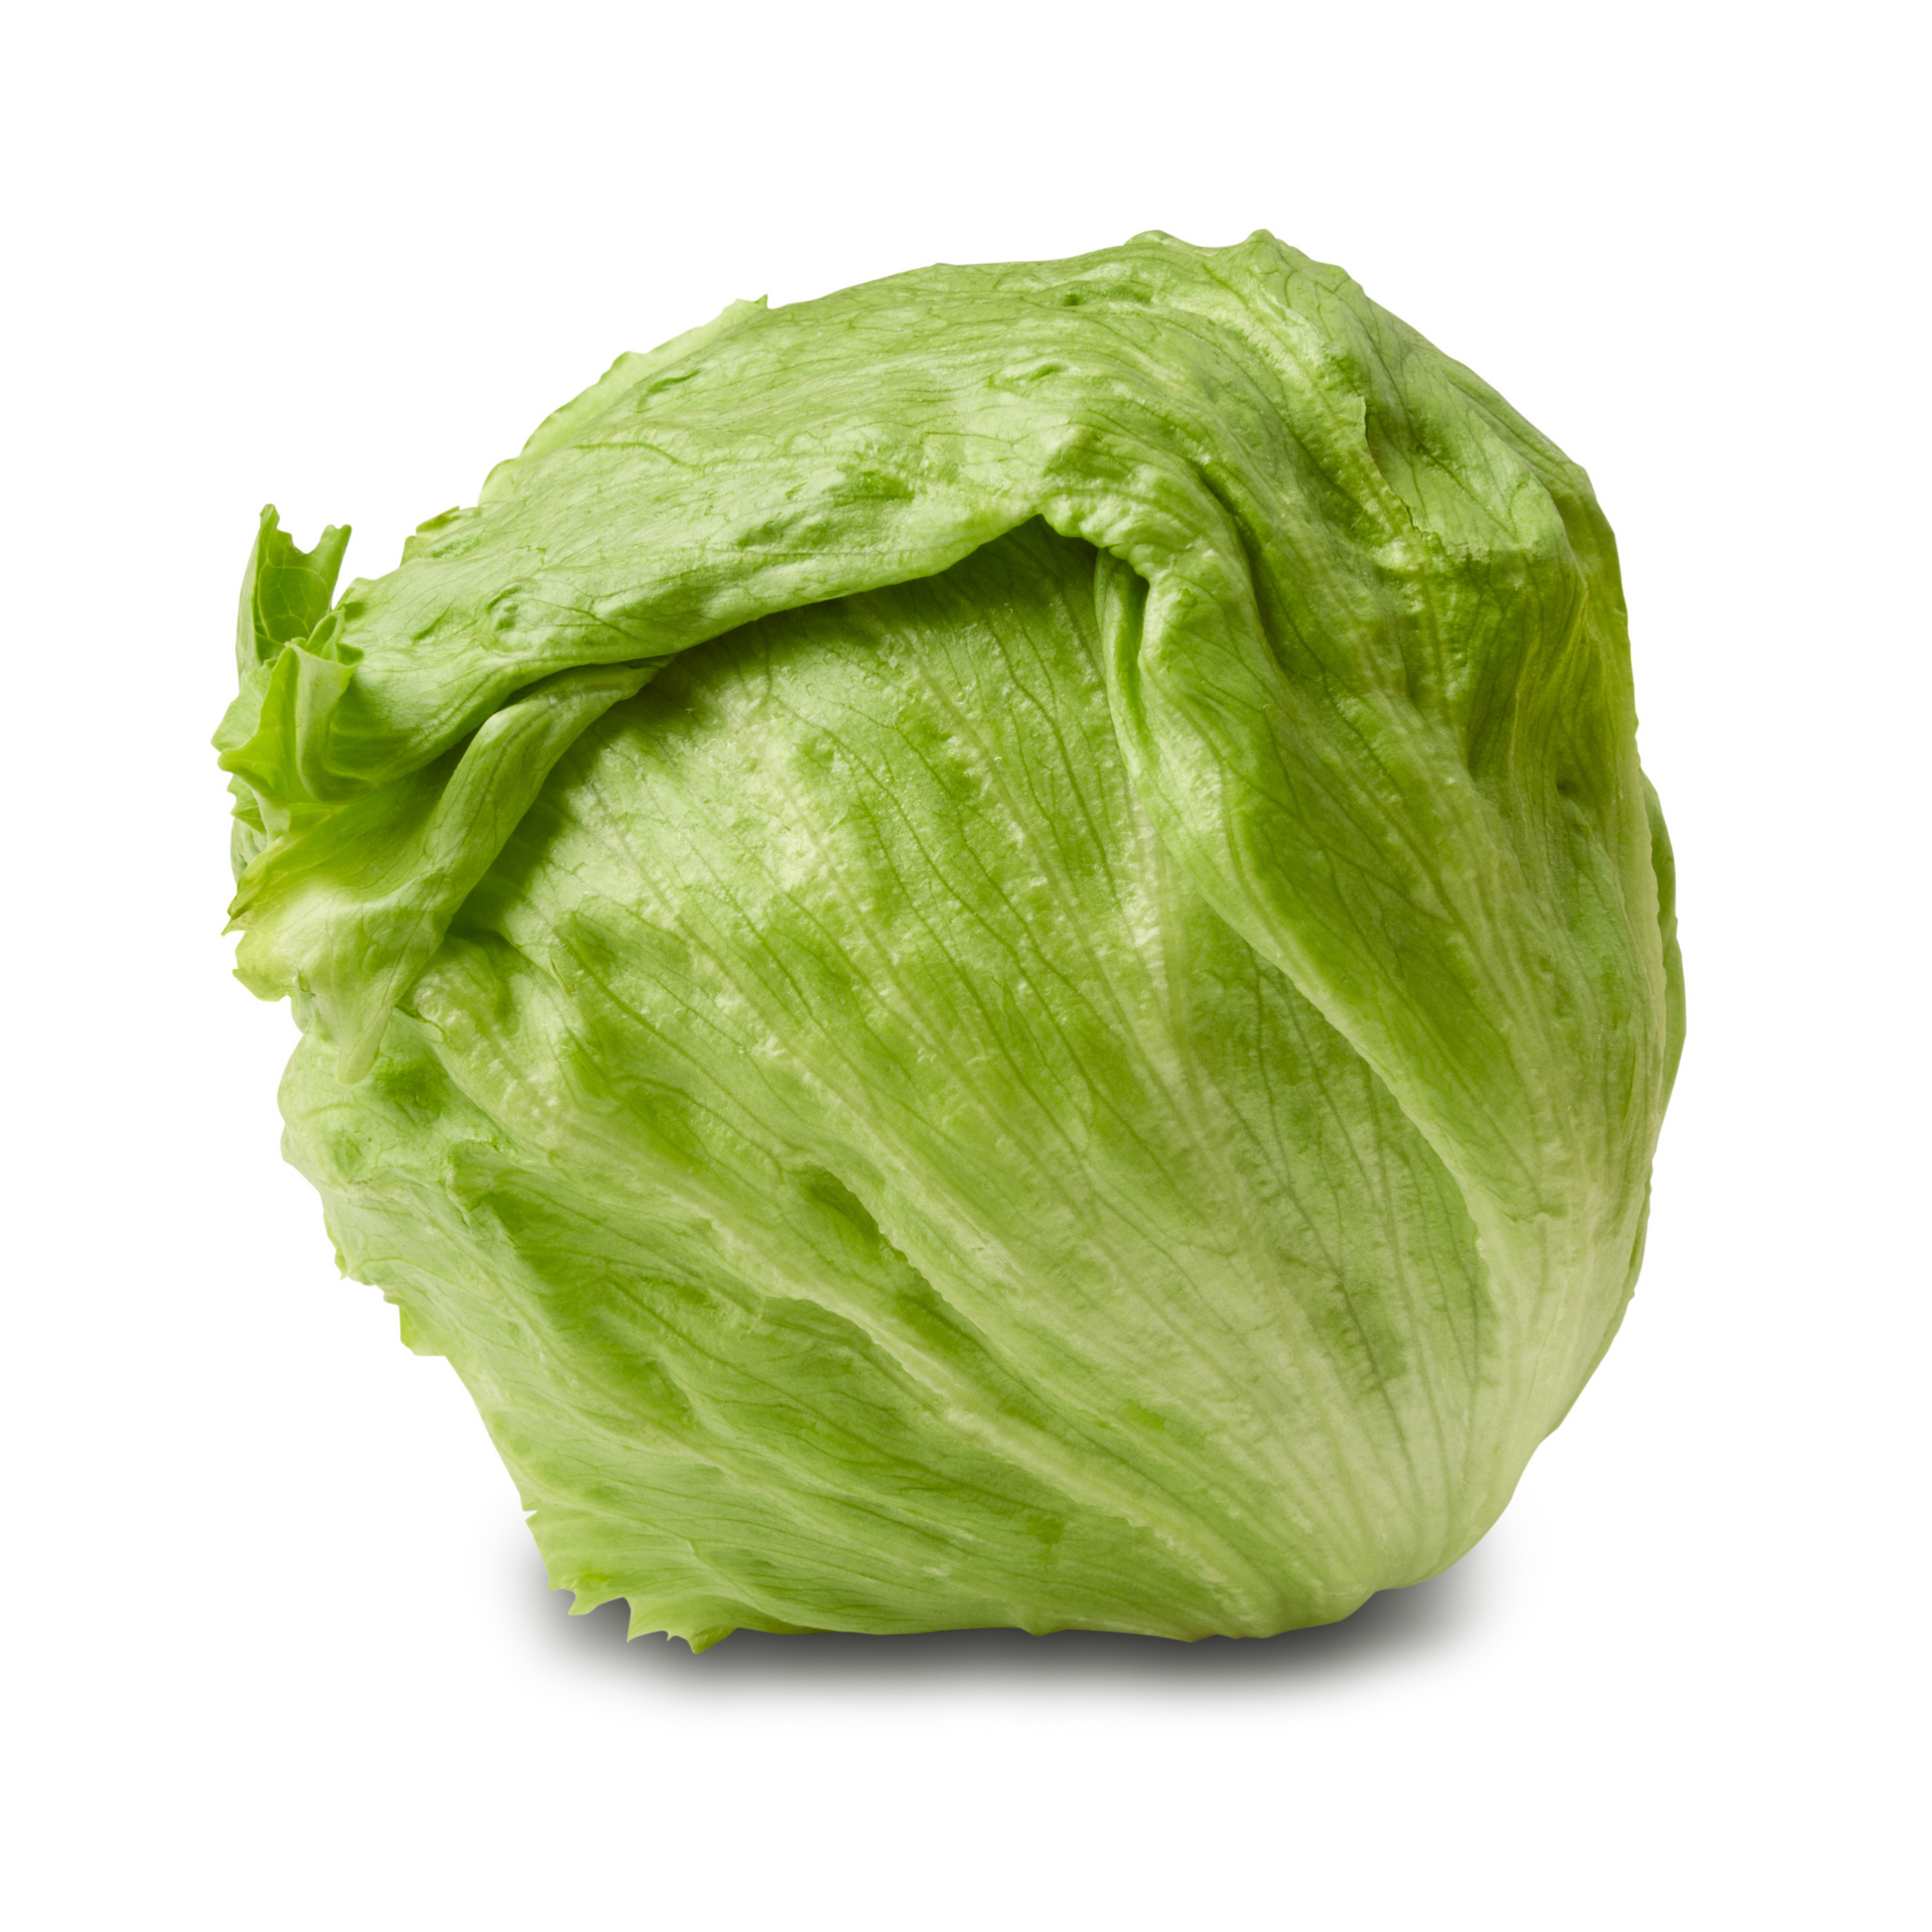 Fresh Iceberg lettuce head displayed on a white background